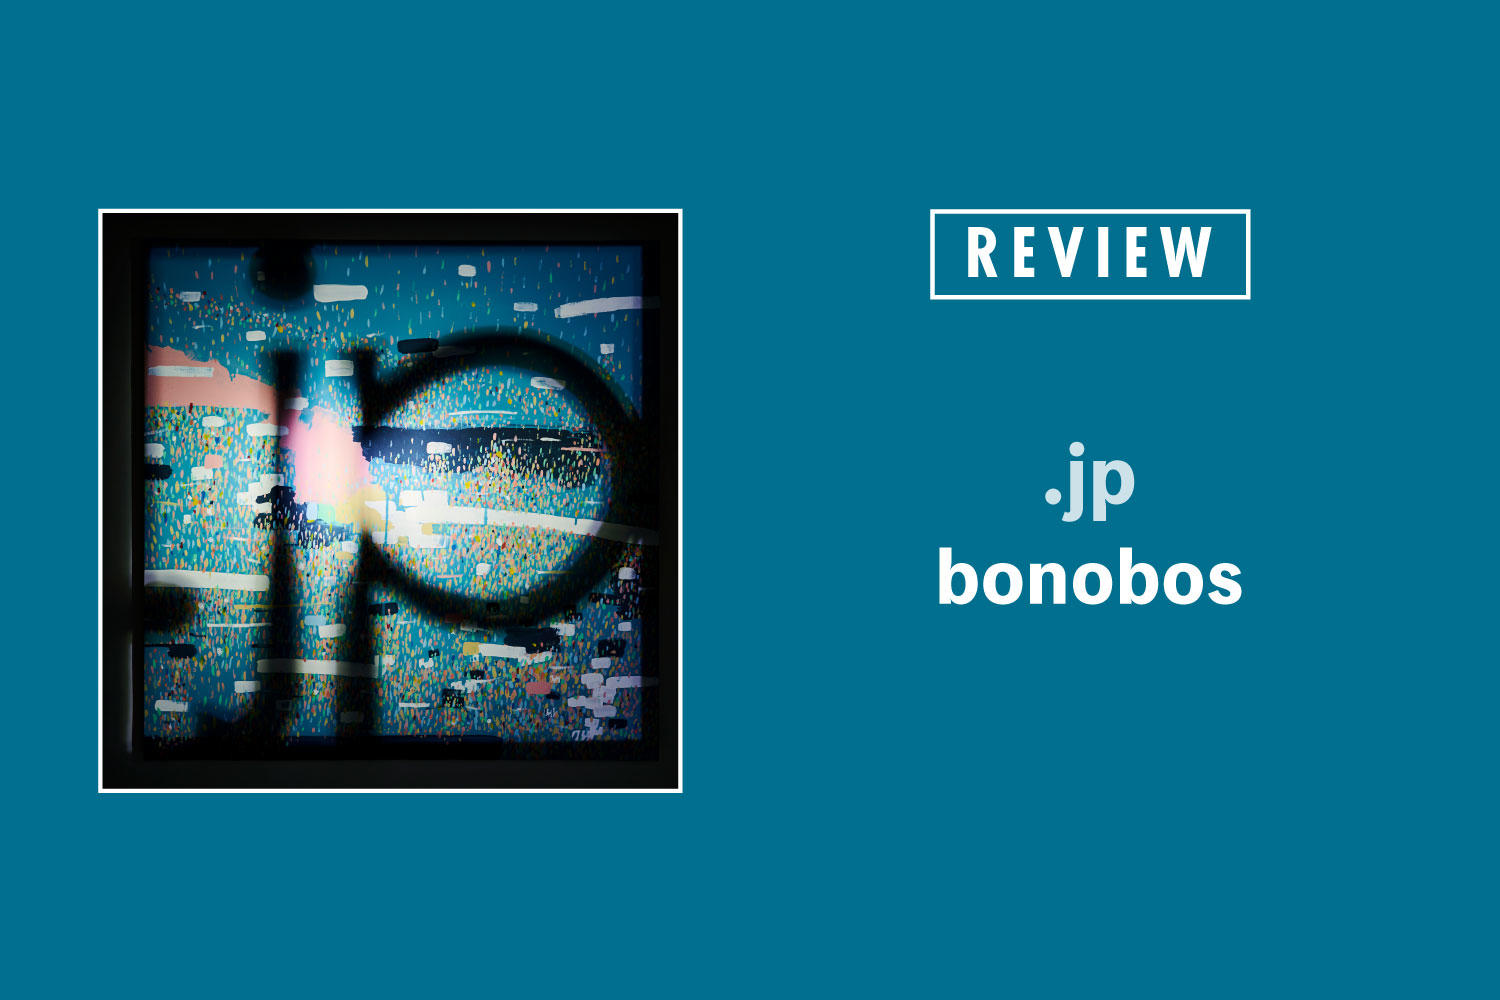 bonobos「.jp」──翳りを湛えつつ楽しげに、ささやかな仕合わせを噛み締める音楽